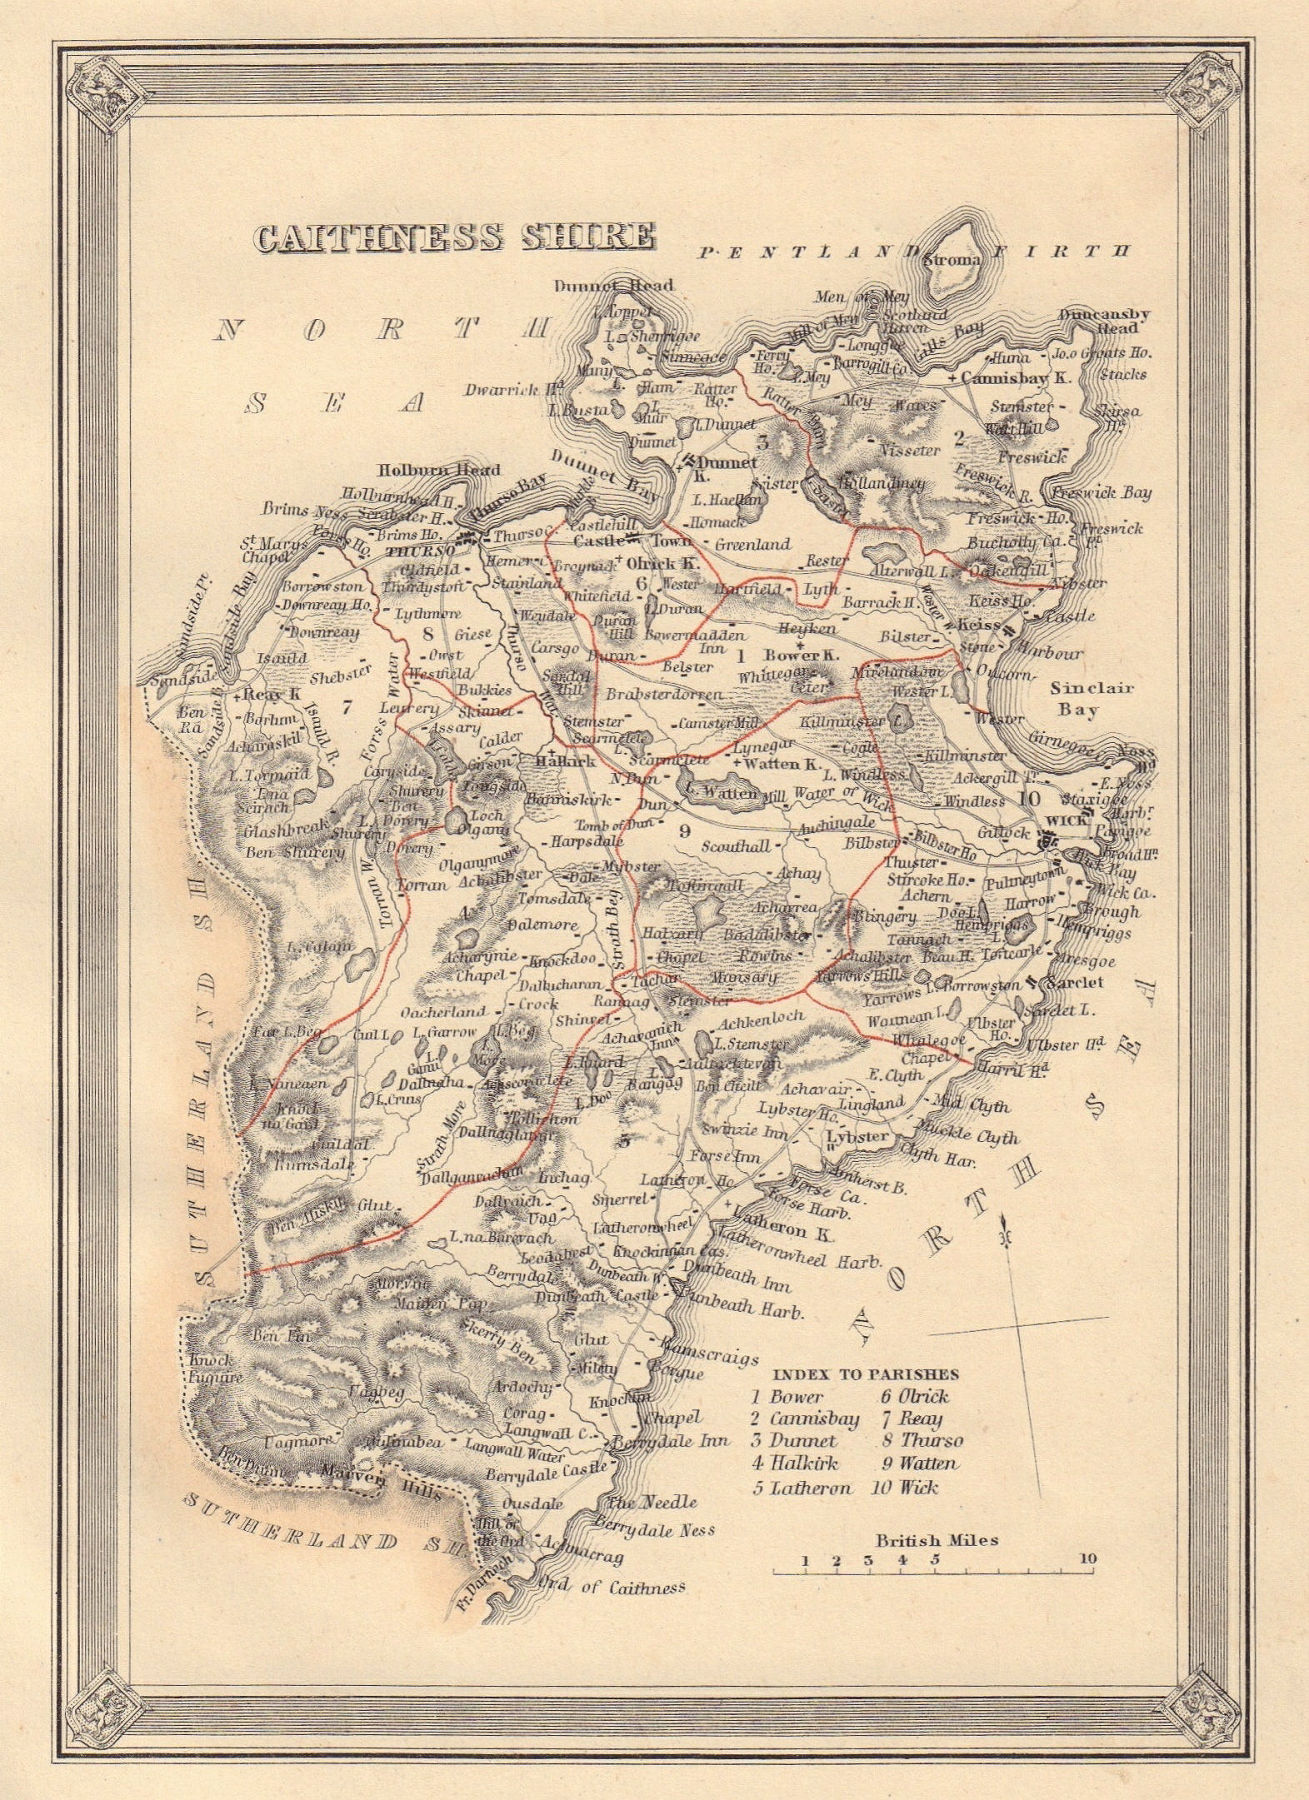 Associate Product Decorative antique county map of Caithness-shire, Scotland. FULLARTON 1866